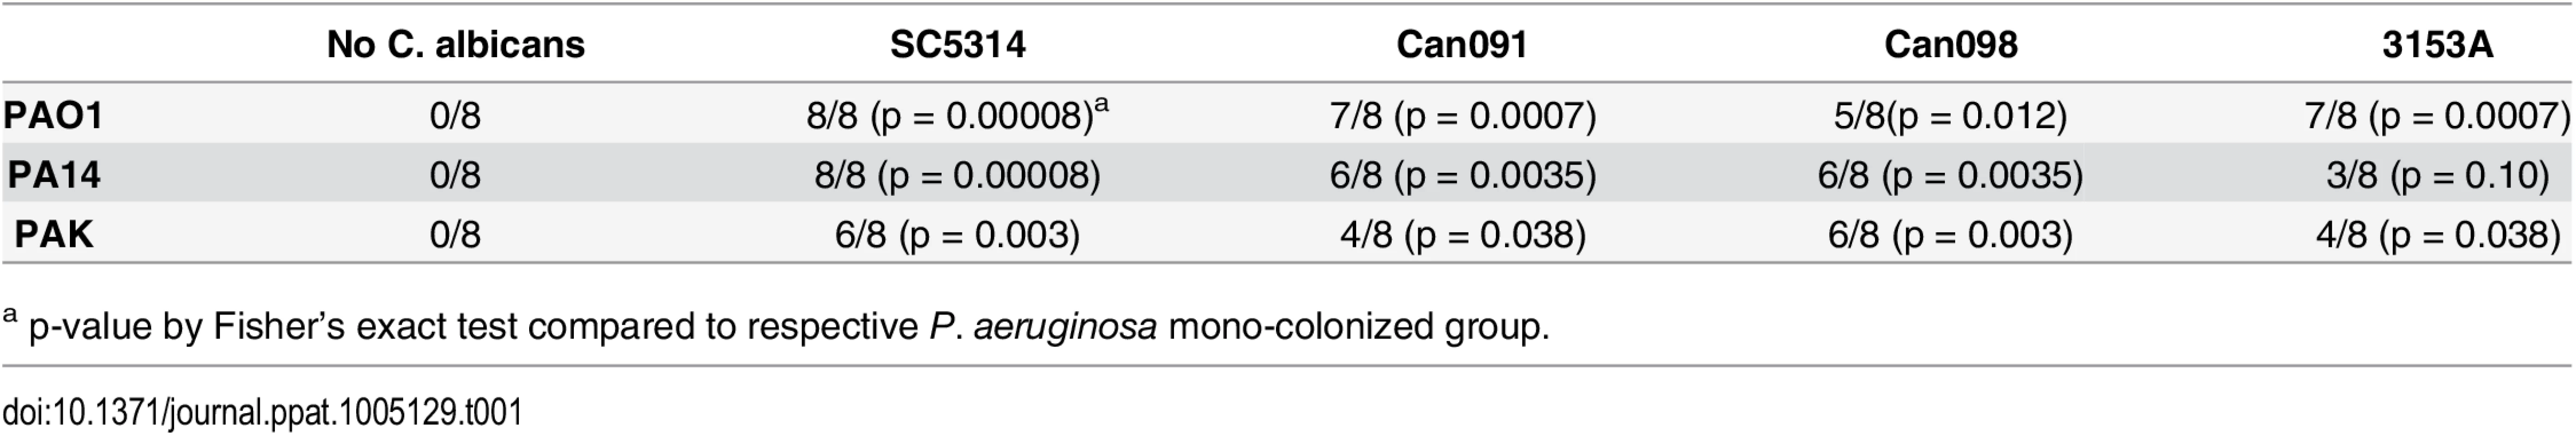 Survival of C3H/HeN Mice GI Colonized with <i>P</i>. <i>aeruginosa</i> ± <i>C</i>. <i>albicans</i> after Induction of Neutropenia.